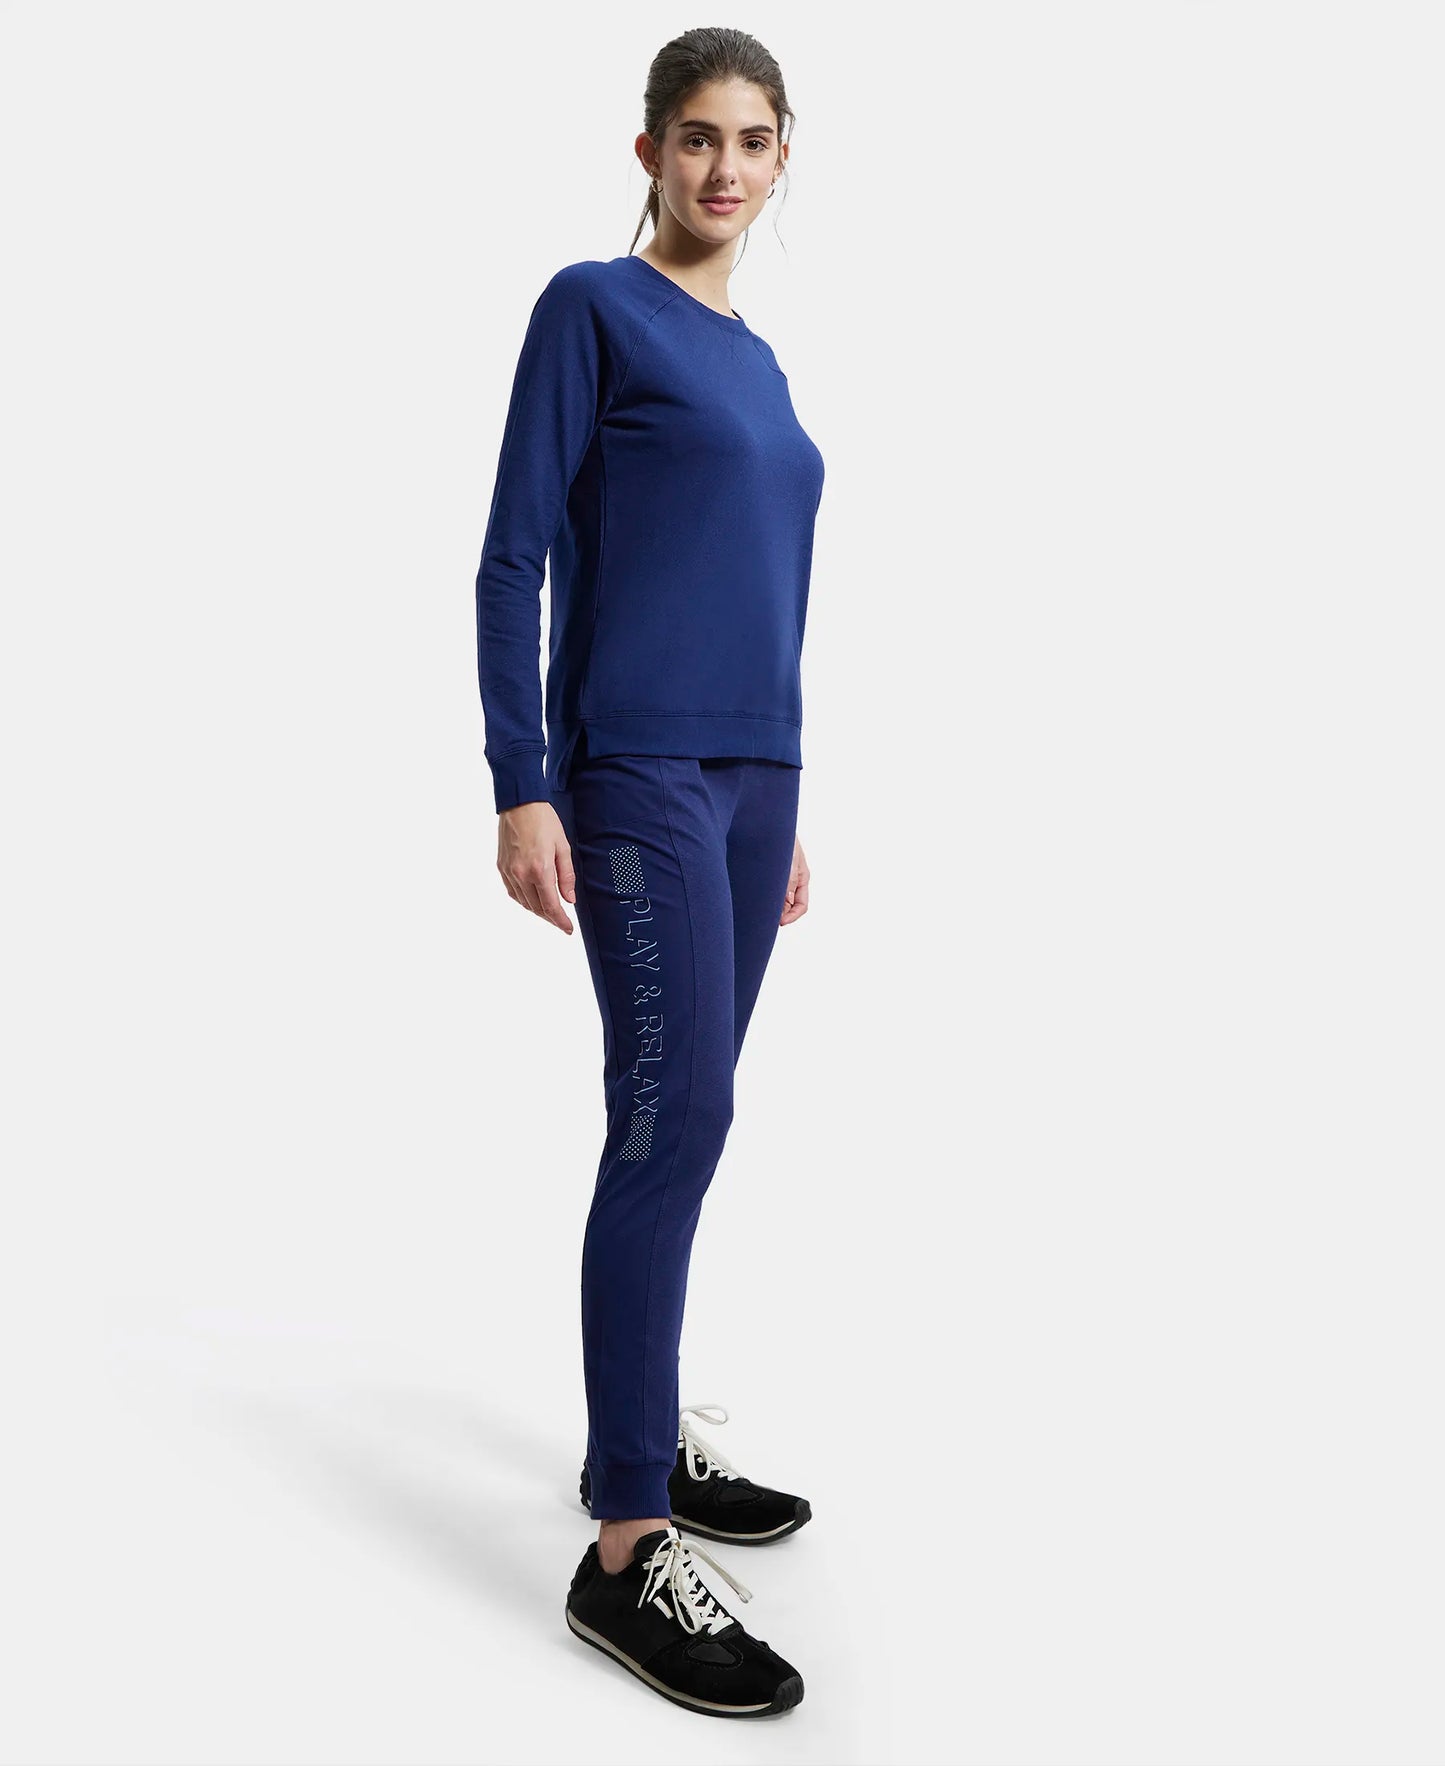 Super Combed Cotton Elastane Slim Fit Joggers With Side Pockets - Imperial Blue Melange-6